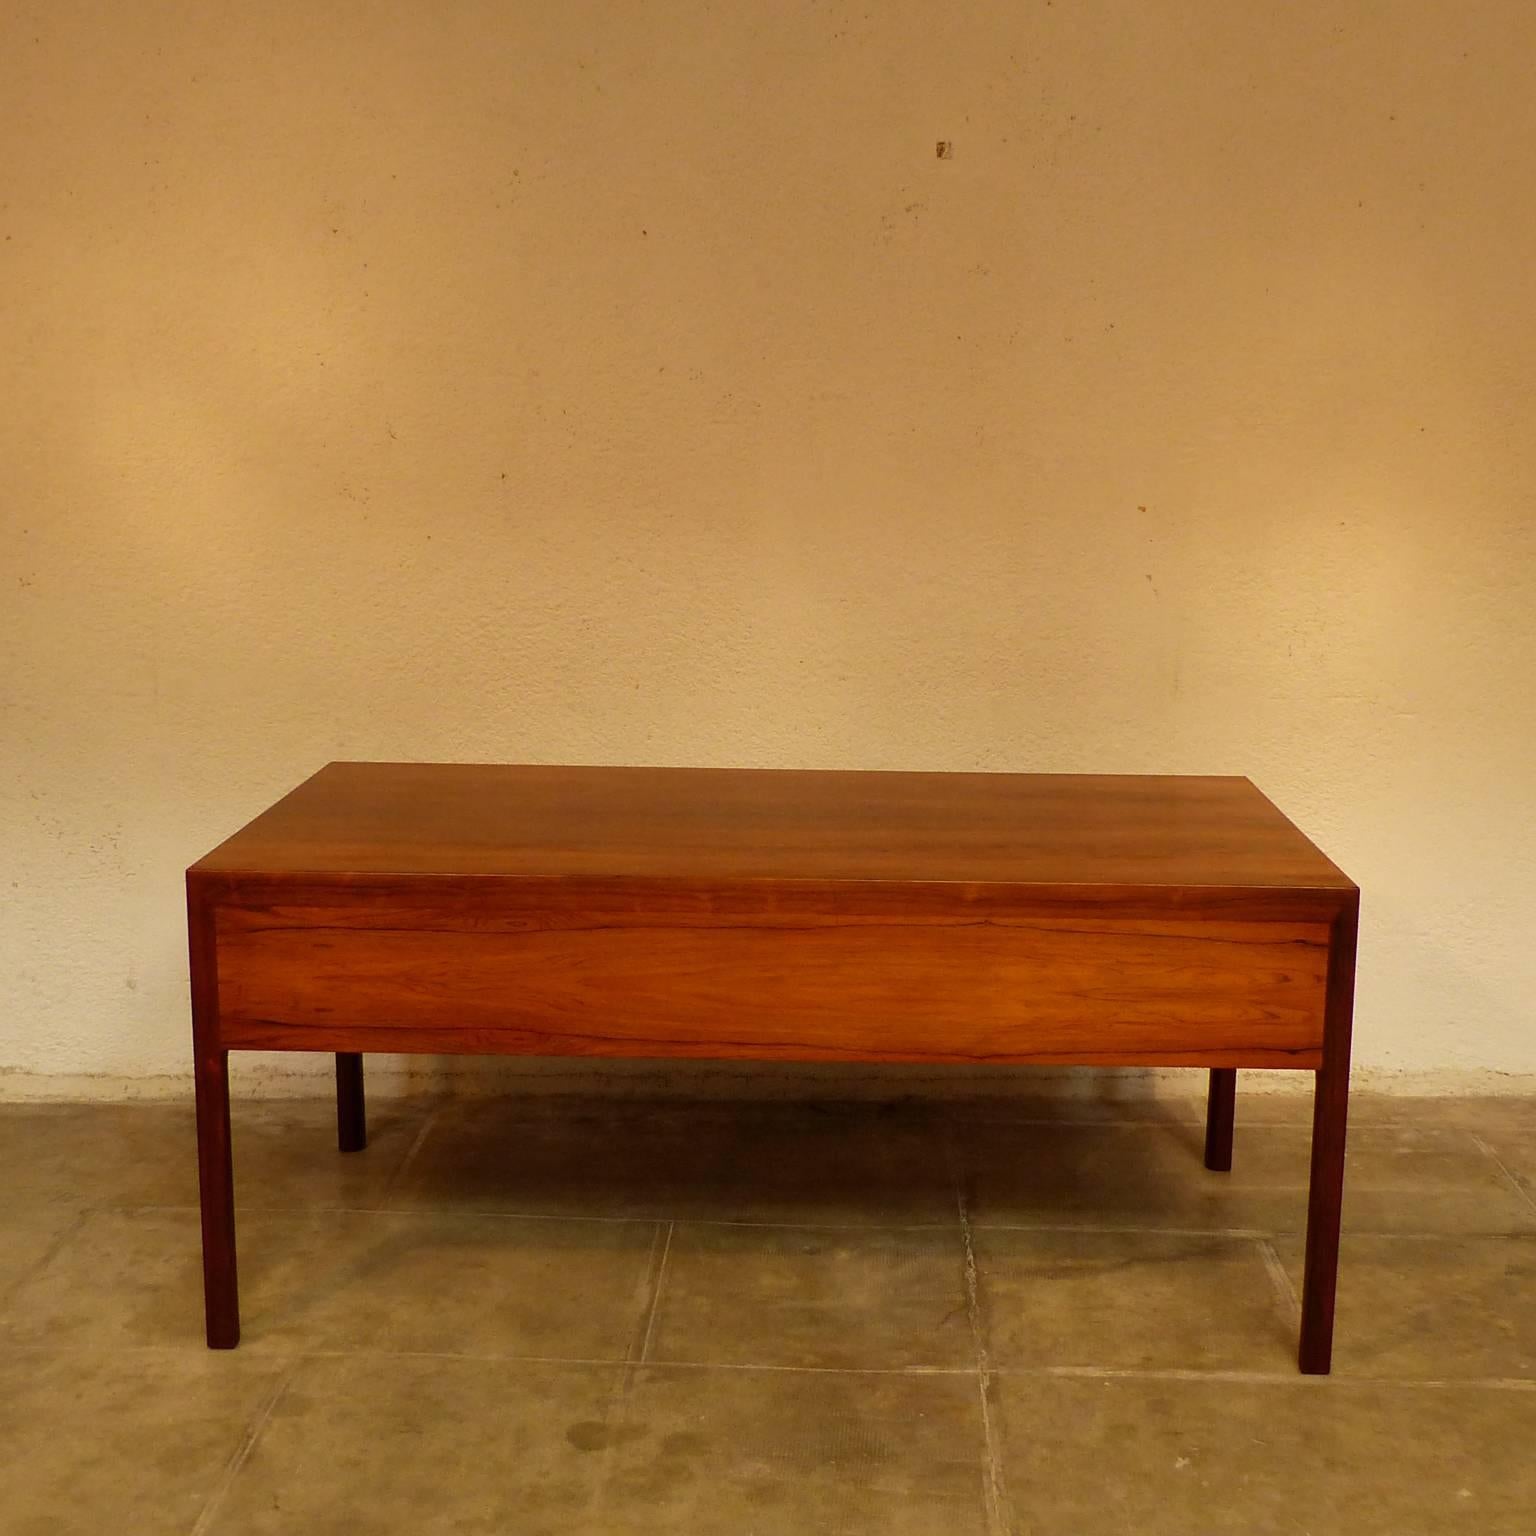 Good original condition.
 Desk in rosewood.  Drawers in oak.
    